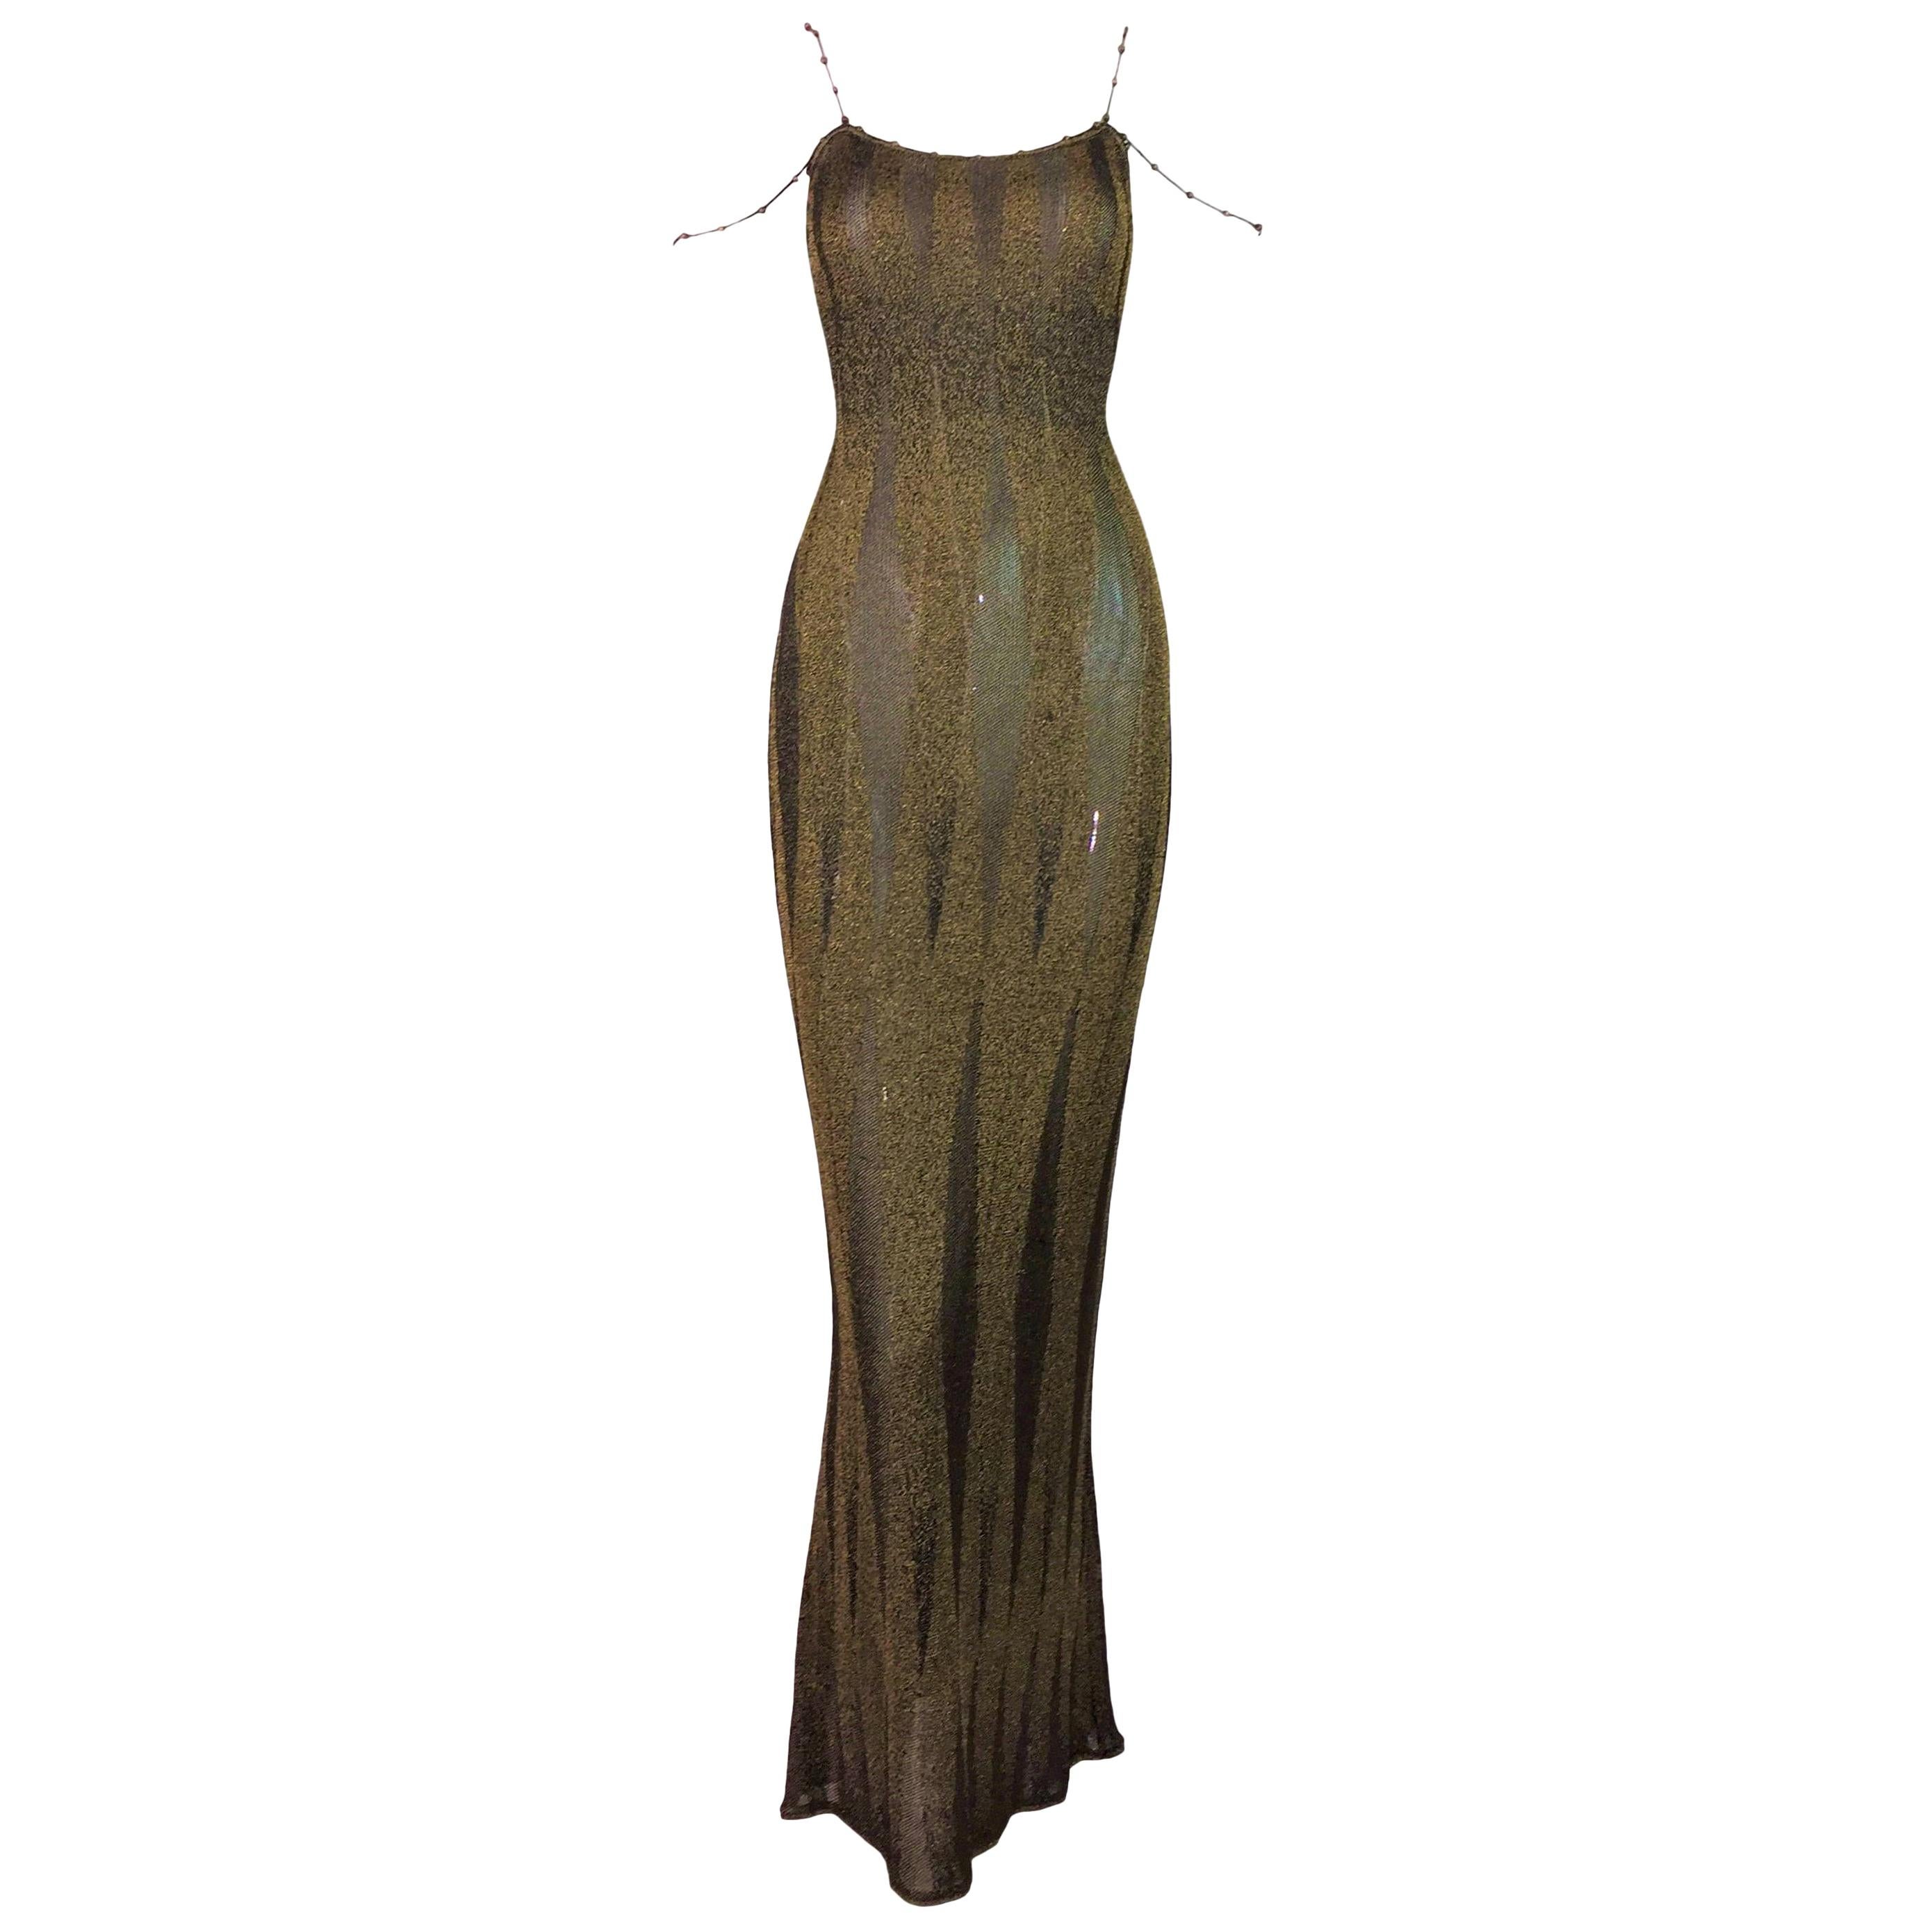 S/S 1999 Christian Dior John Galliano Sheer Black & Gold Knit Wiggle Gown Dress